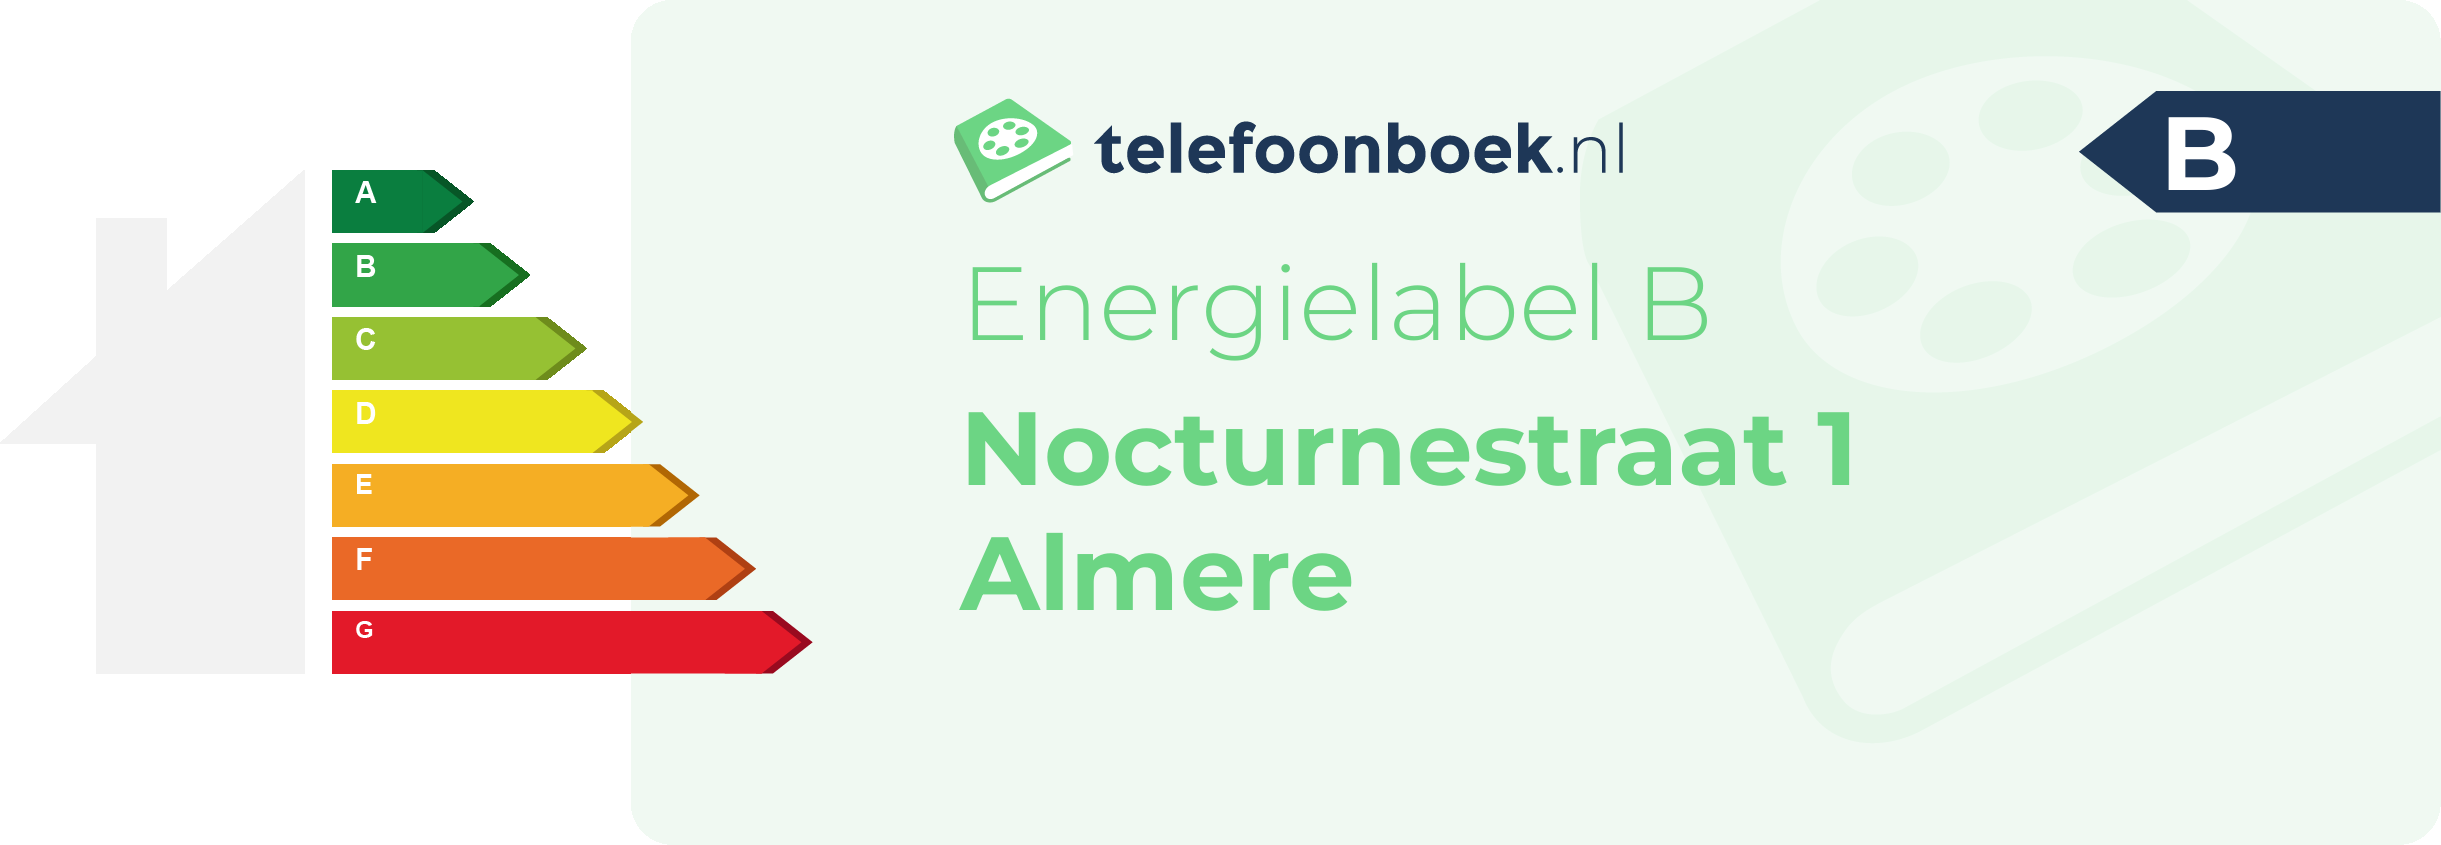 Energielabel Nocturnestraat 1 Almere